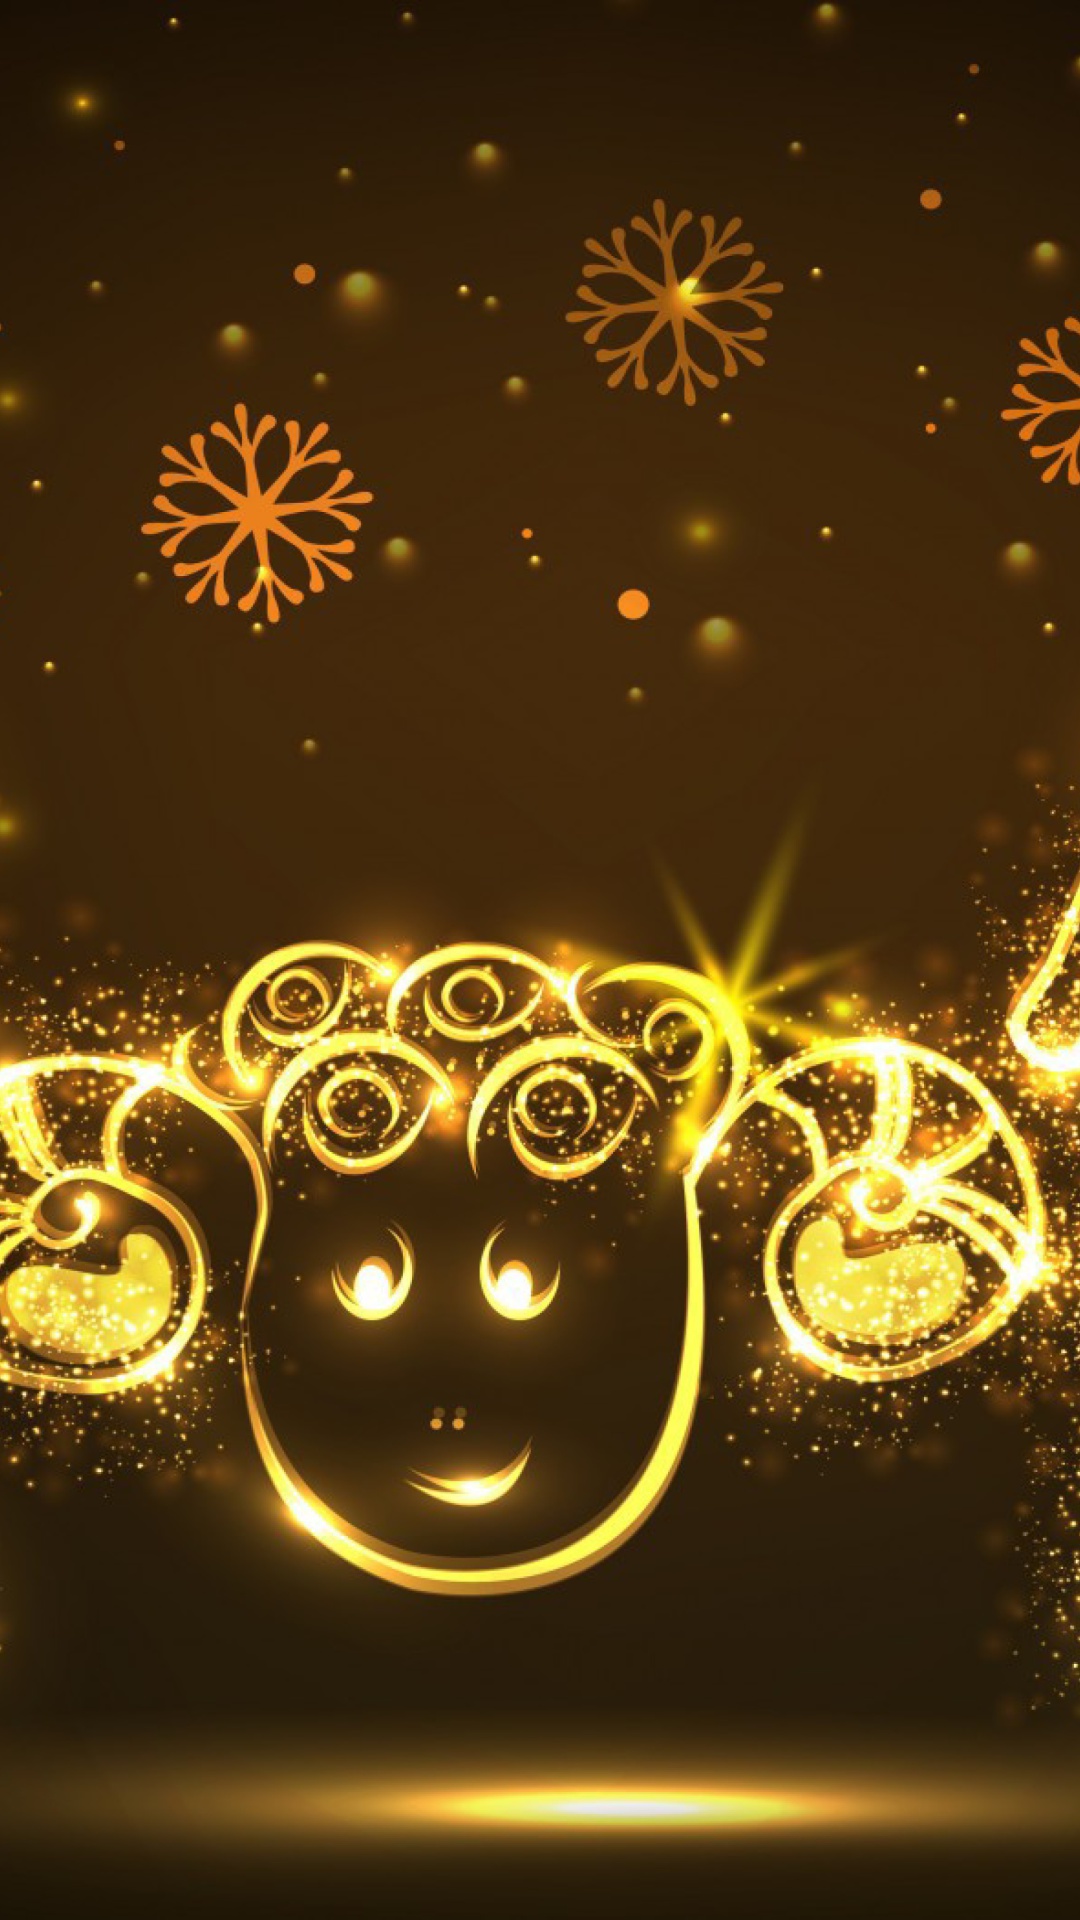 Golden Lights Happy New Year 2015 wallpaper 1080x1920